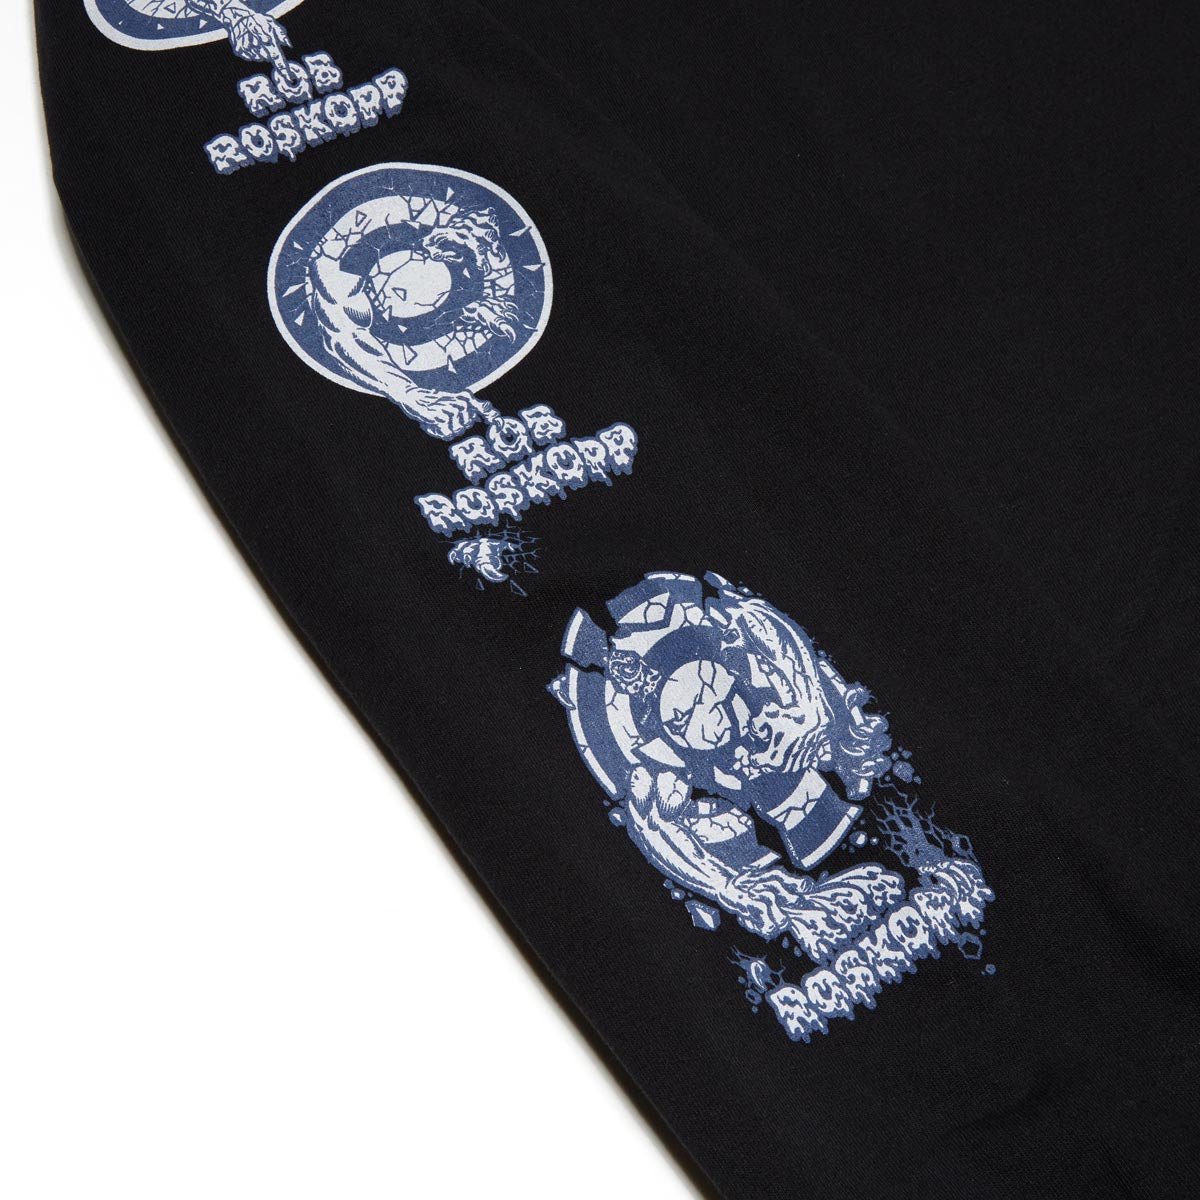 Santa Cruz Rob Evolution Long Sleeve T-Shirt - Black/Blue image 3